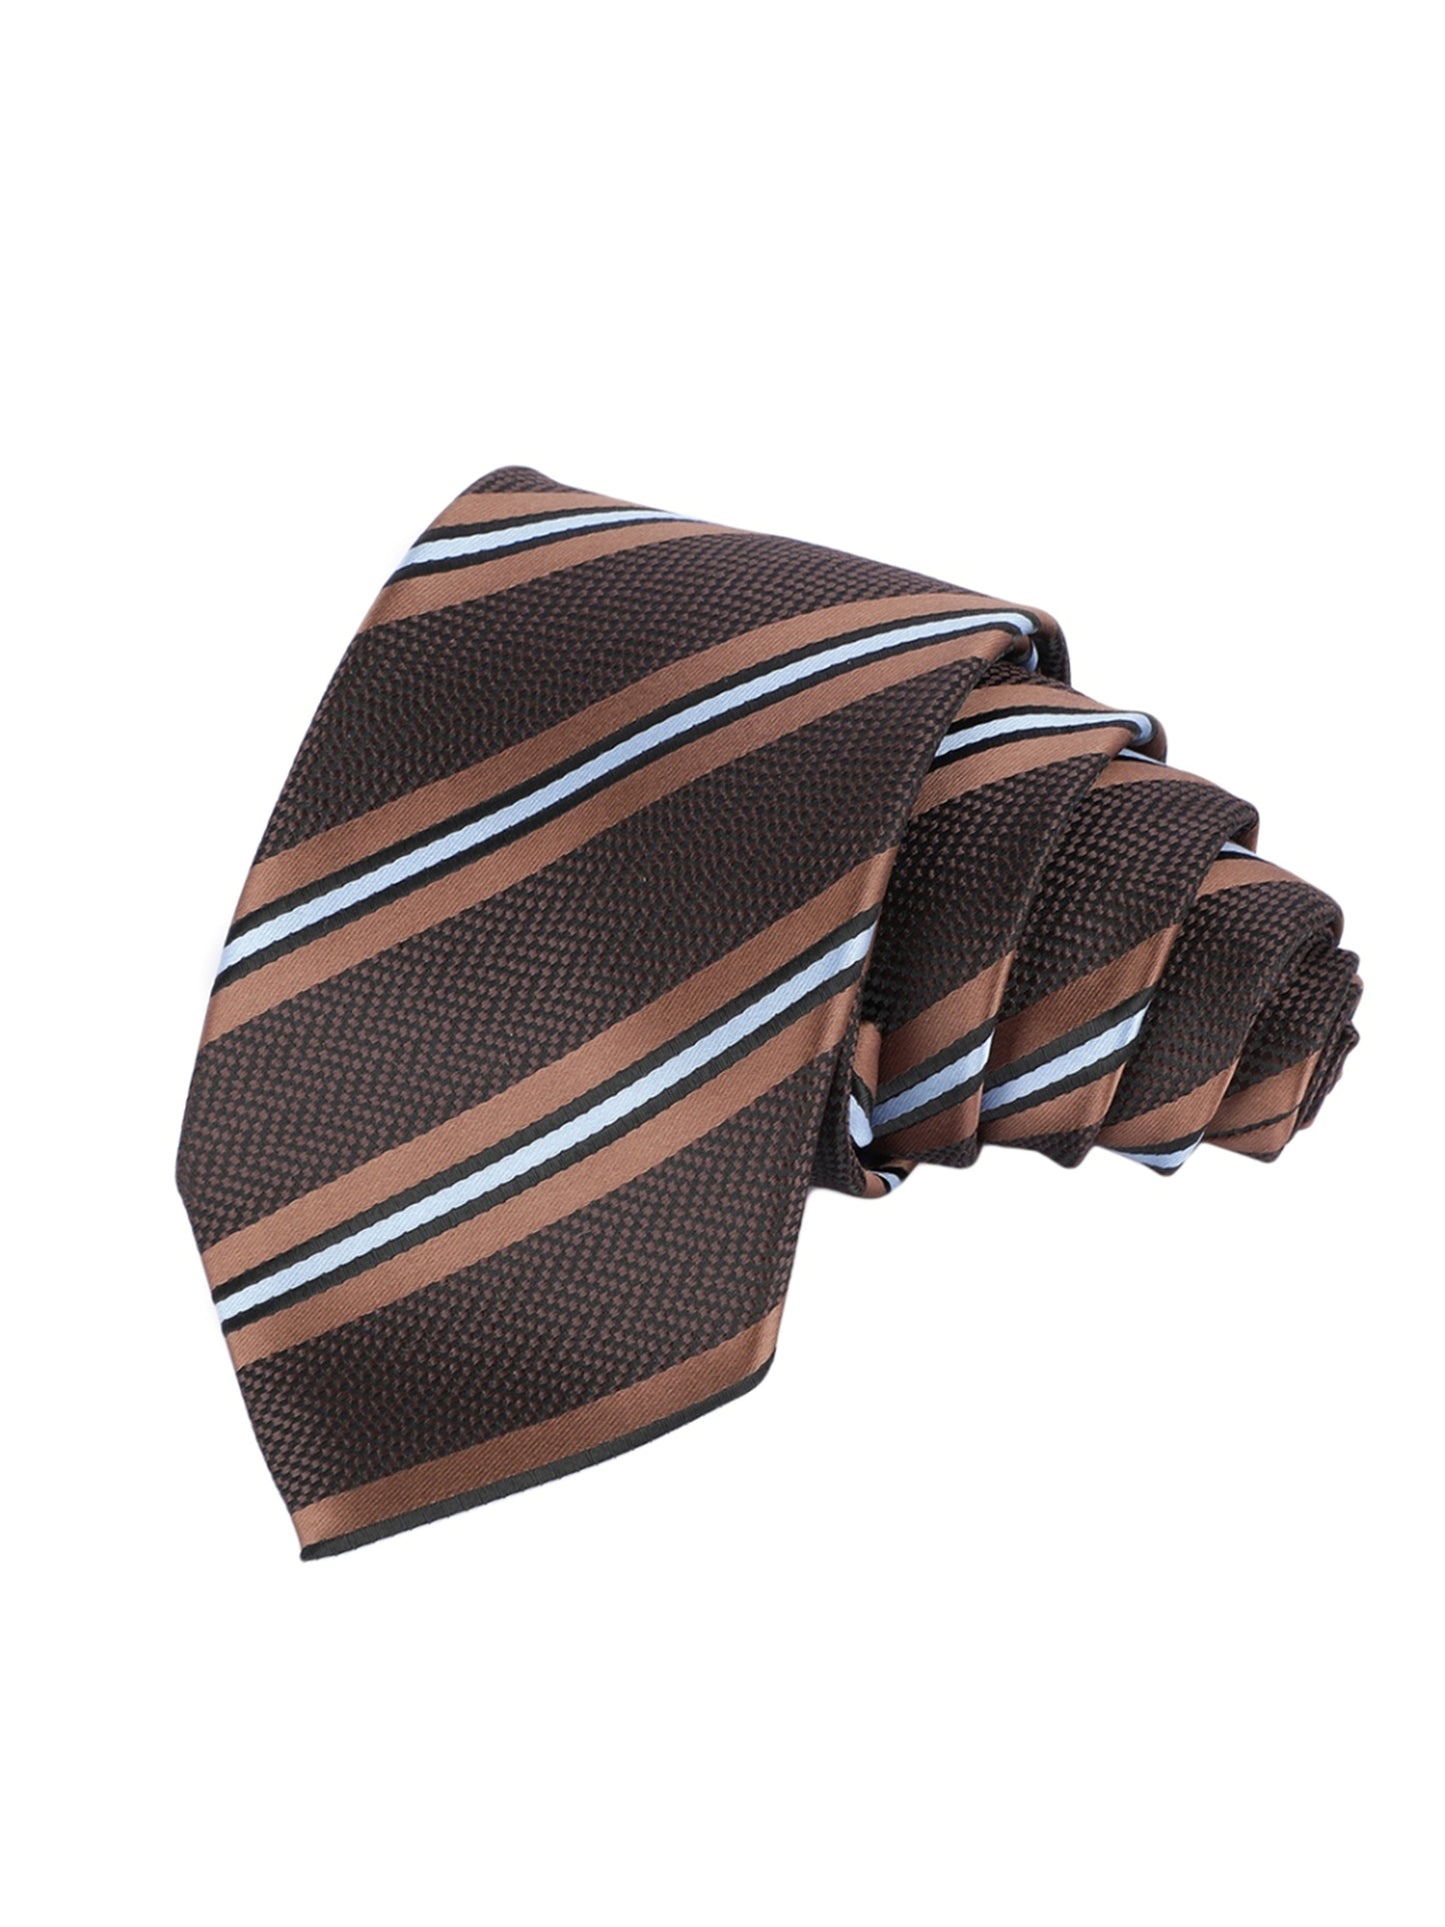 Alvaro Castagnino Microfiber Brown::Multi Colored Stripes Necktie for Men